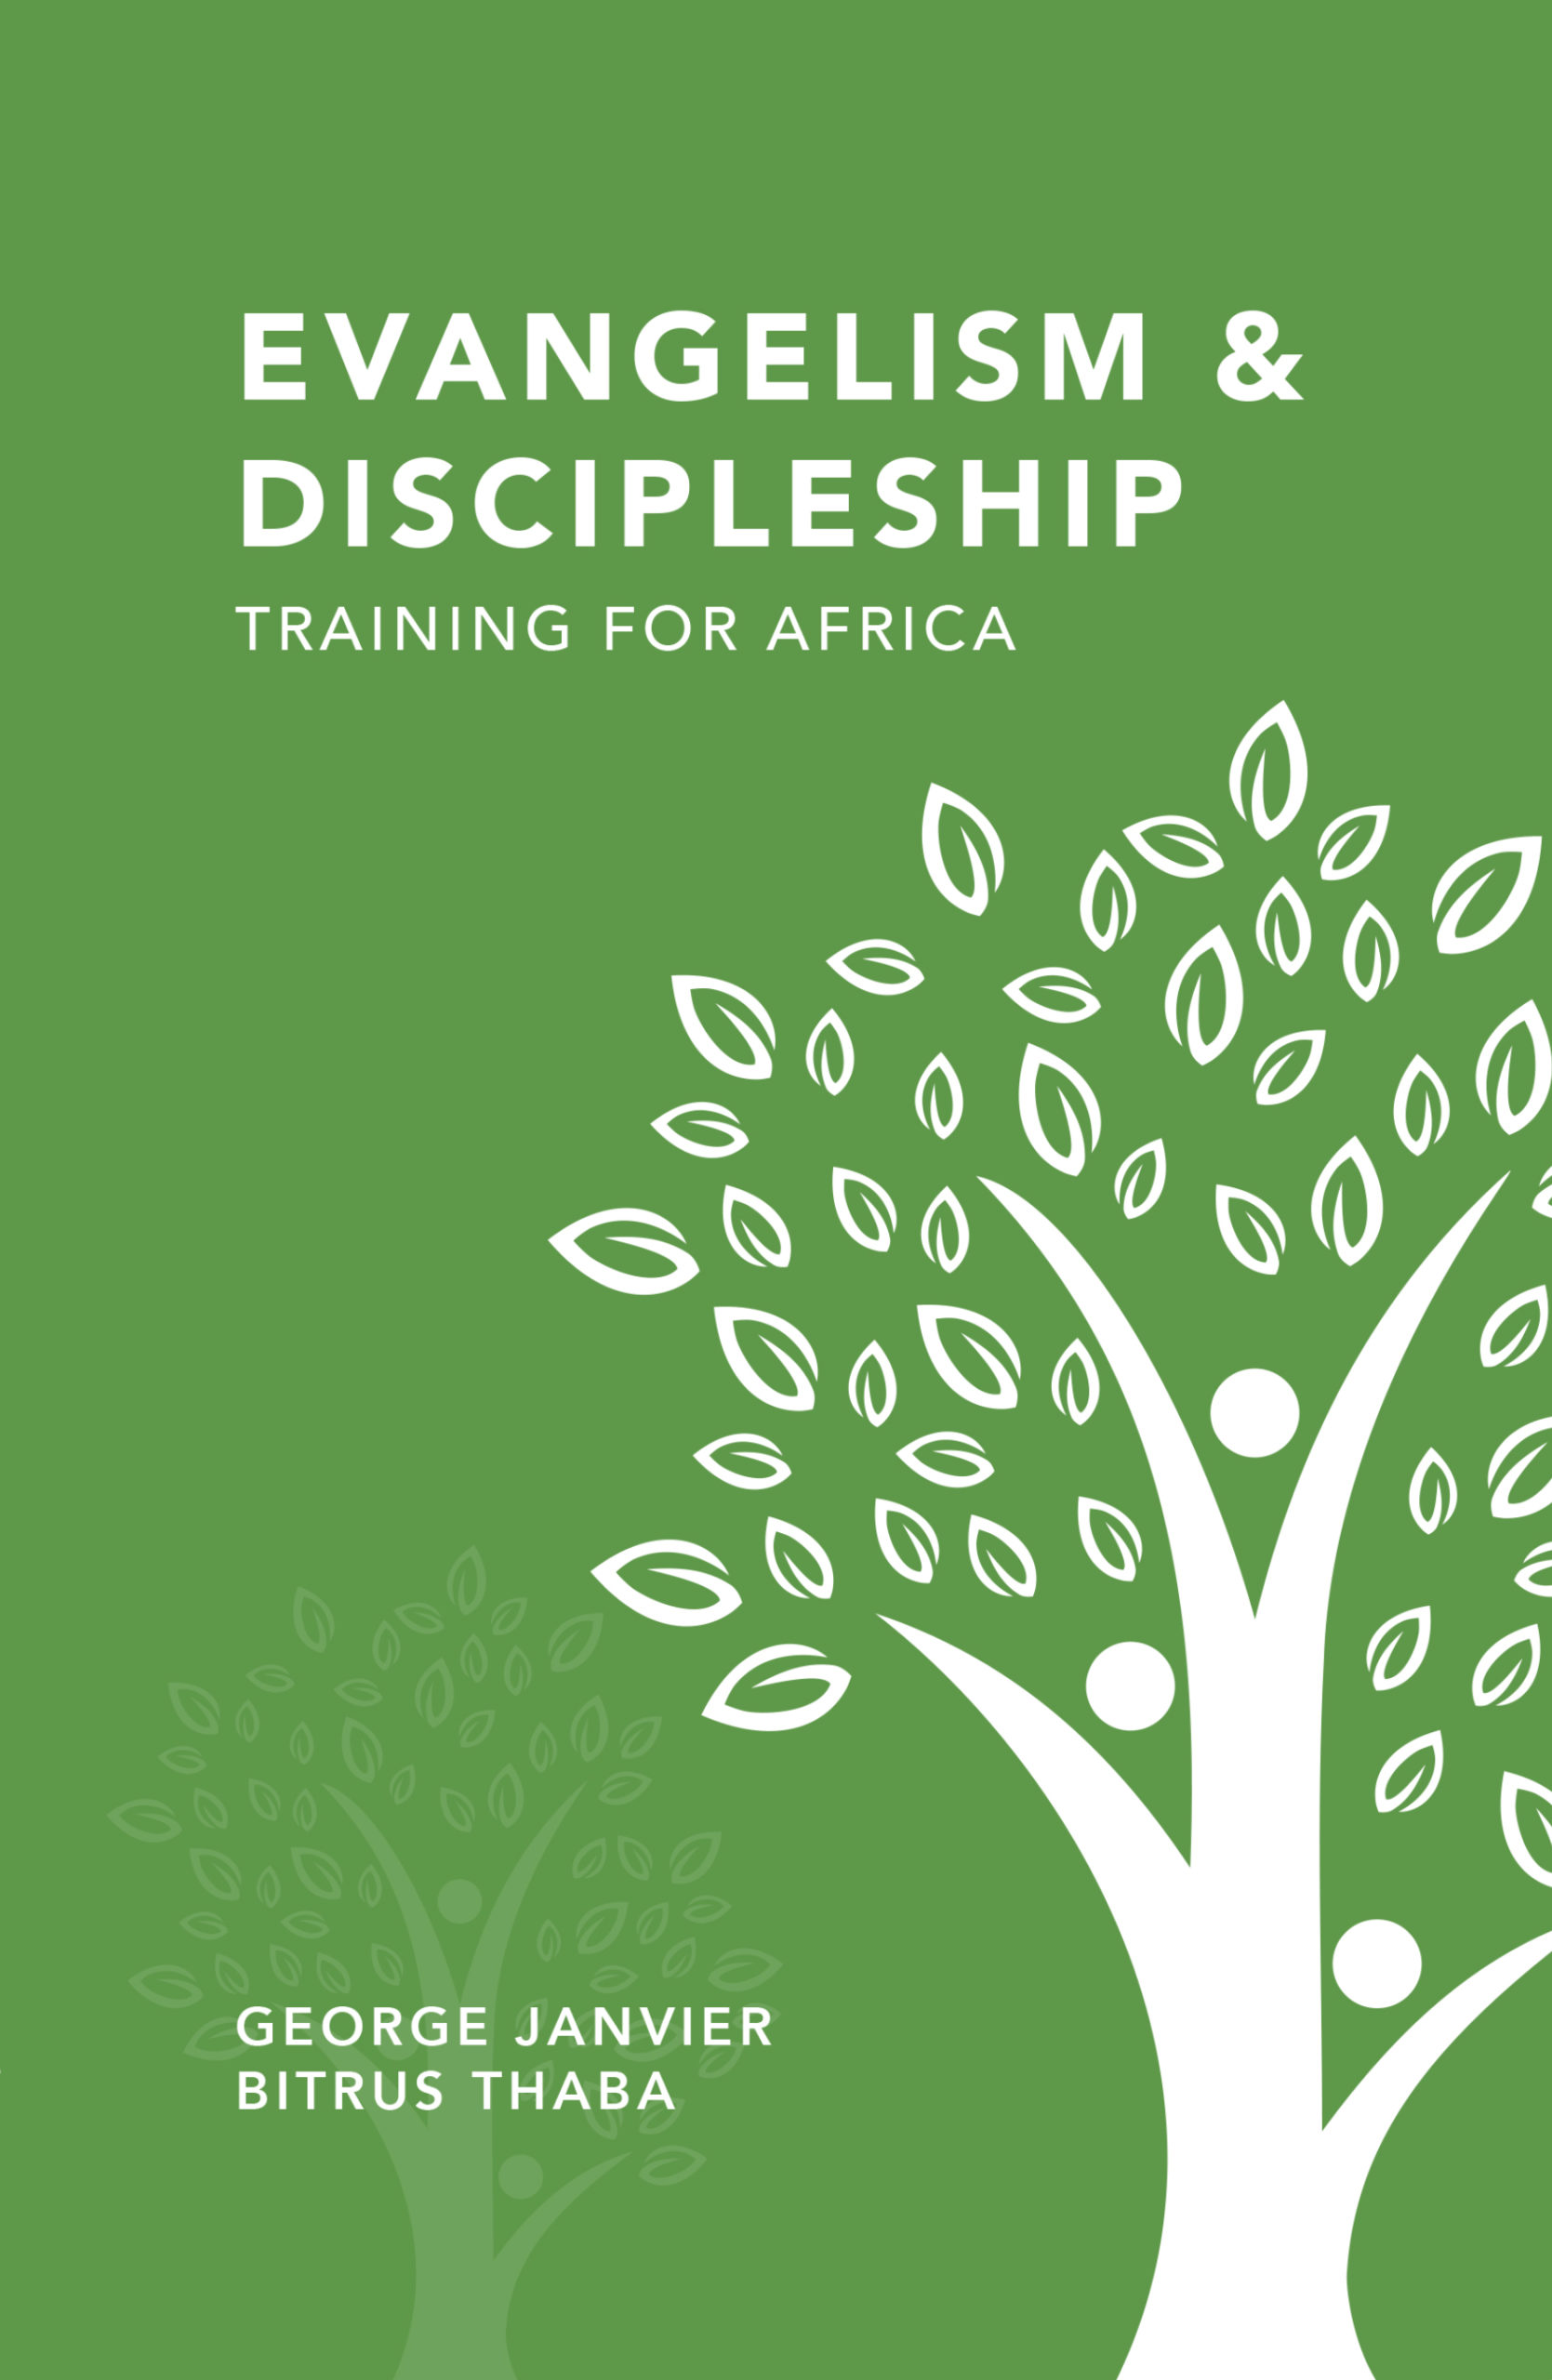 Evangelism and discipleship 